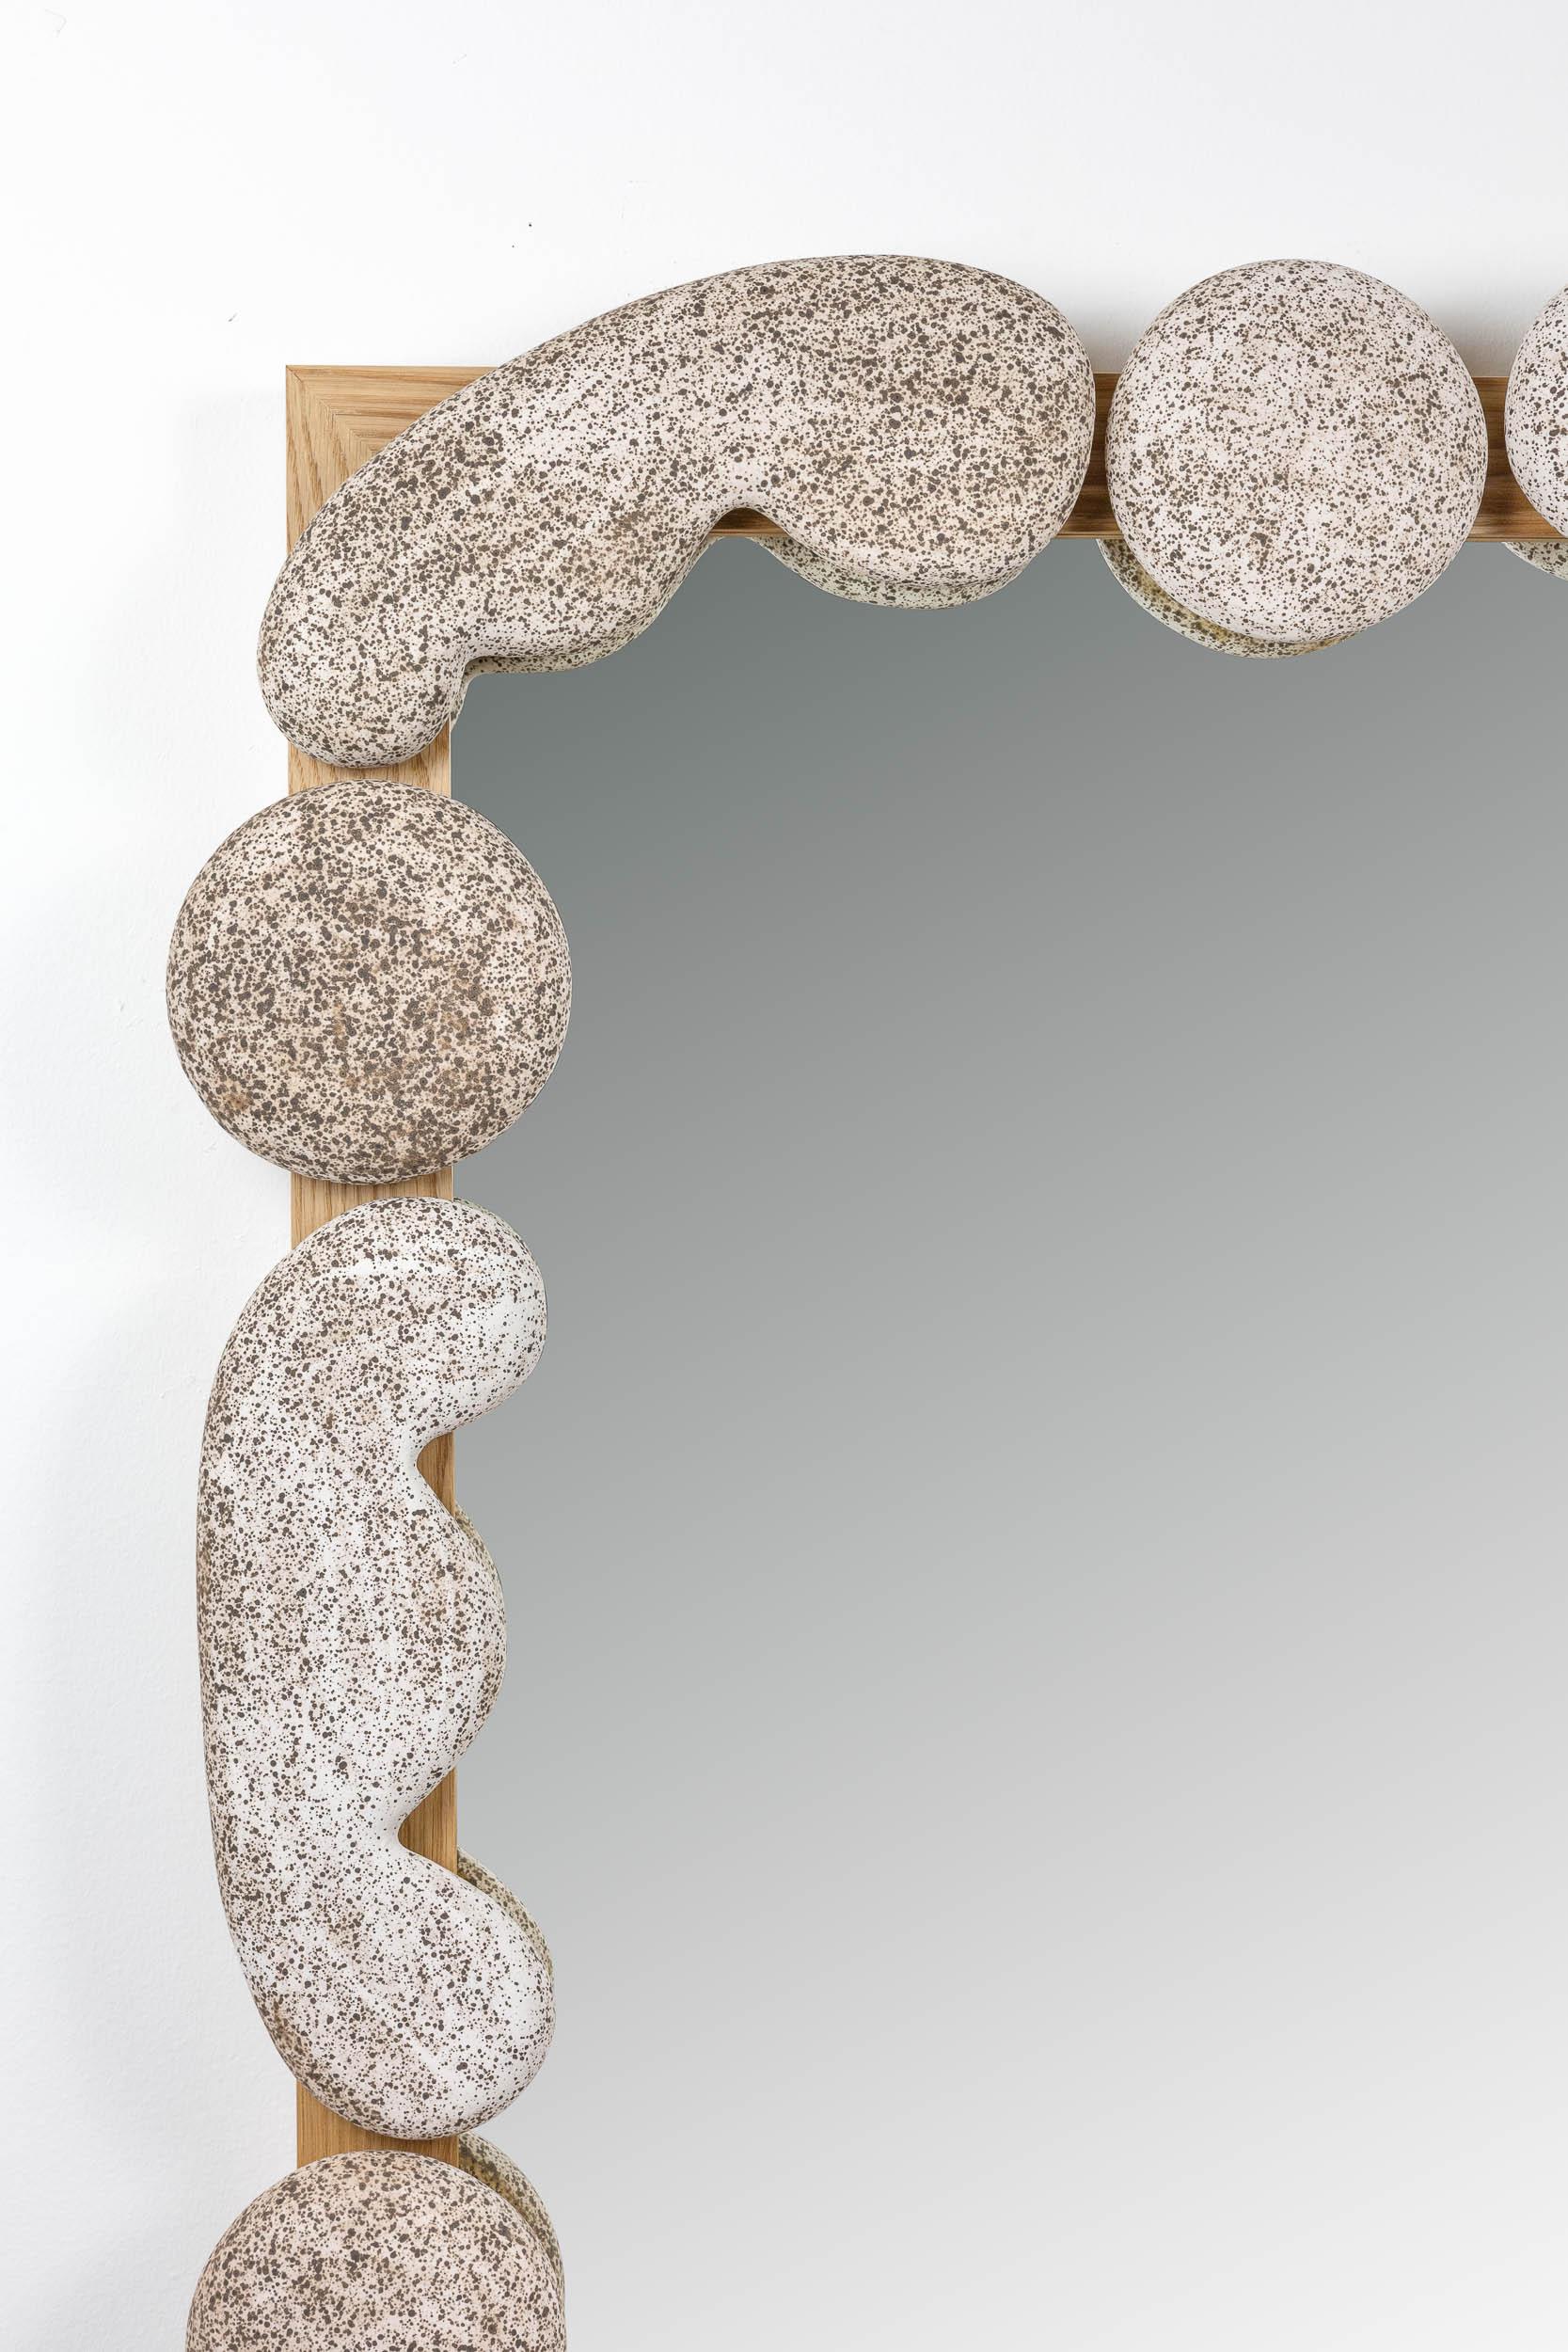 Modern Ceramic & Hardwood, Roebling Wall Mirror, Organic Sculptural Stone For Sale